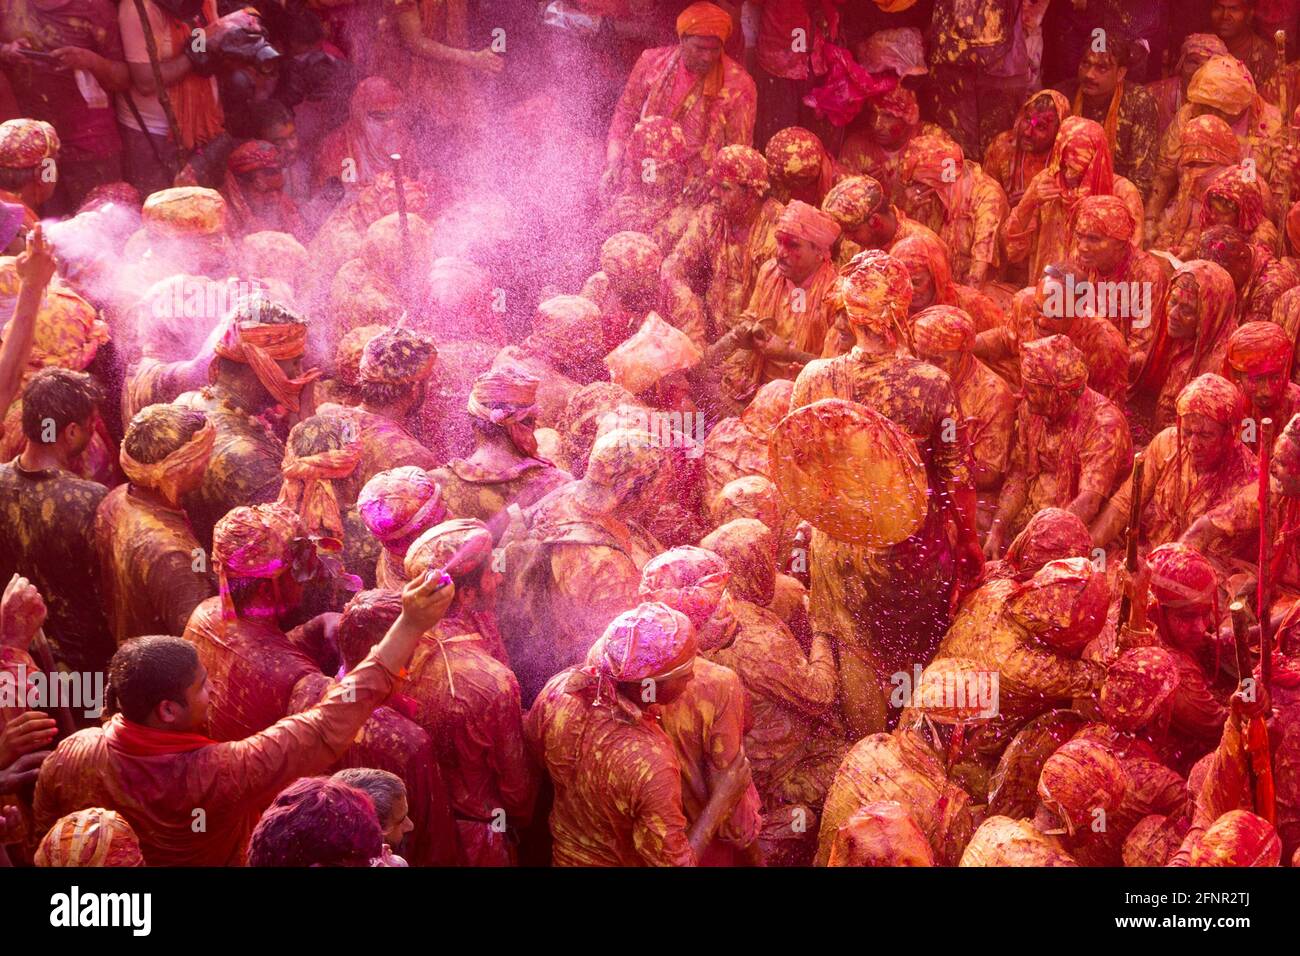 Lathmar Holi Barsana Nandgaon Vrindavan Festival dei colori in tutta l'India Foto Stock